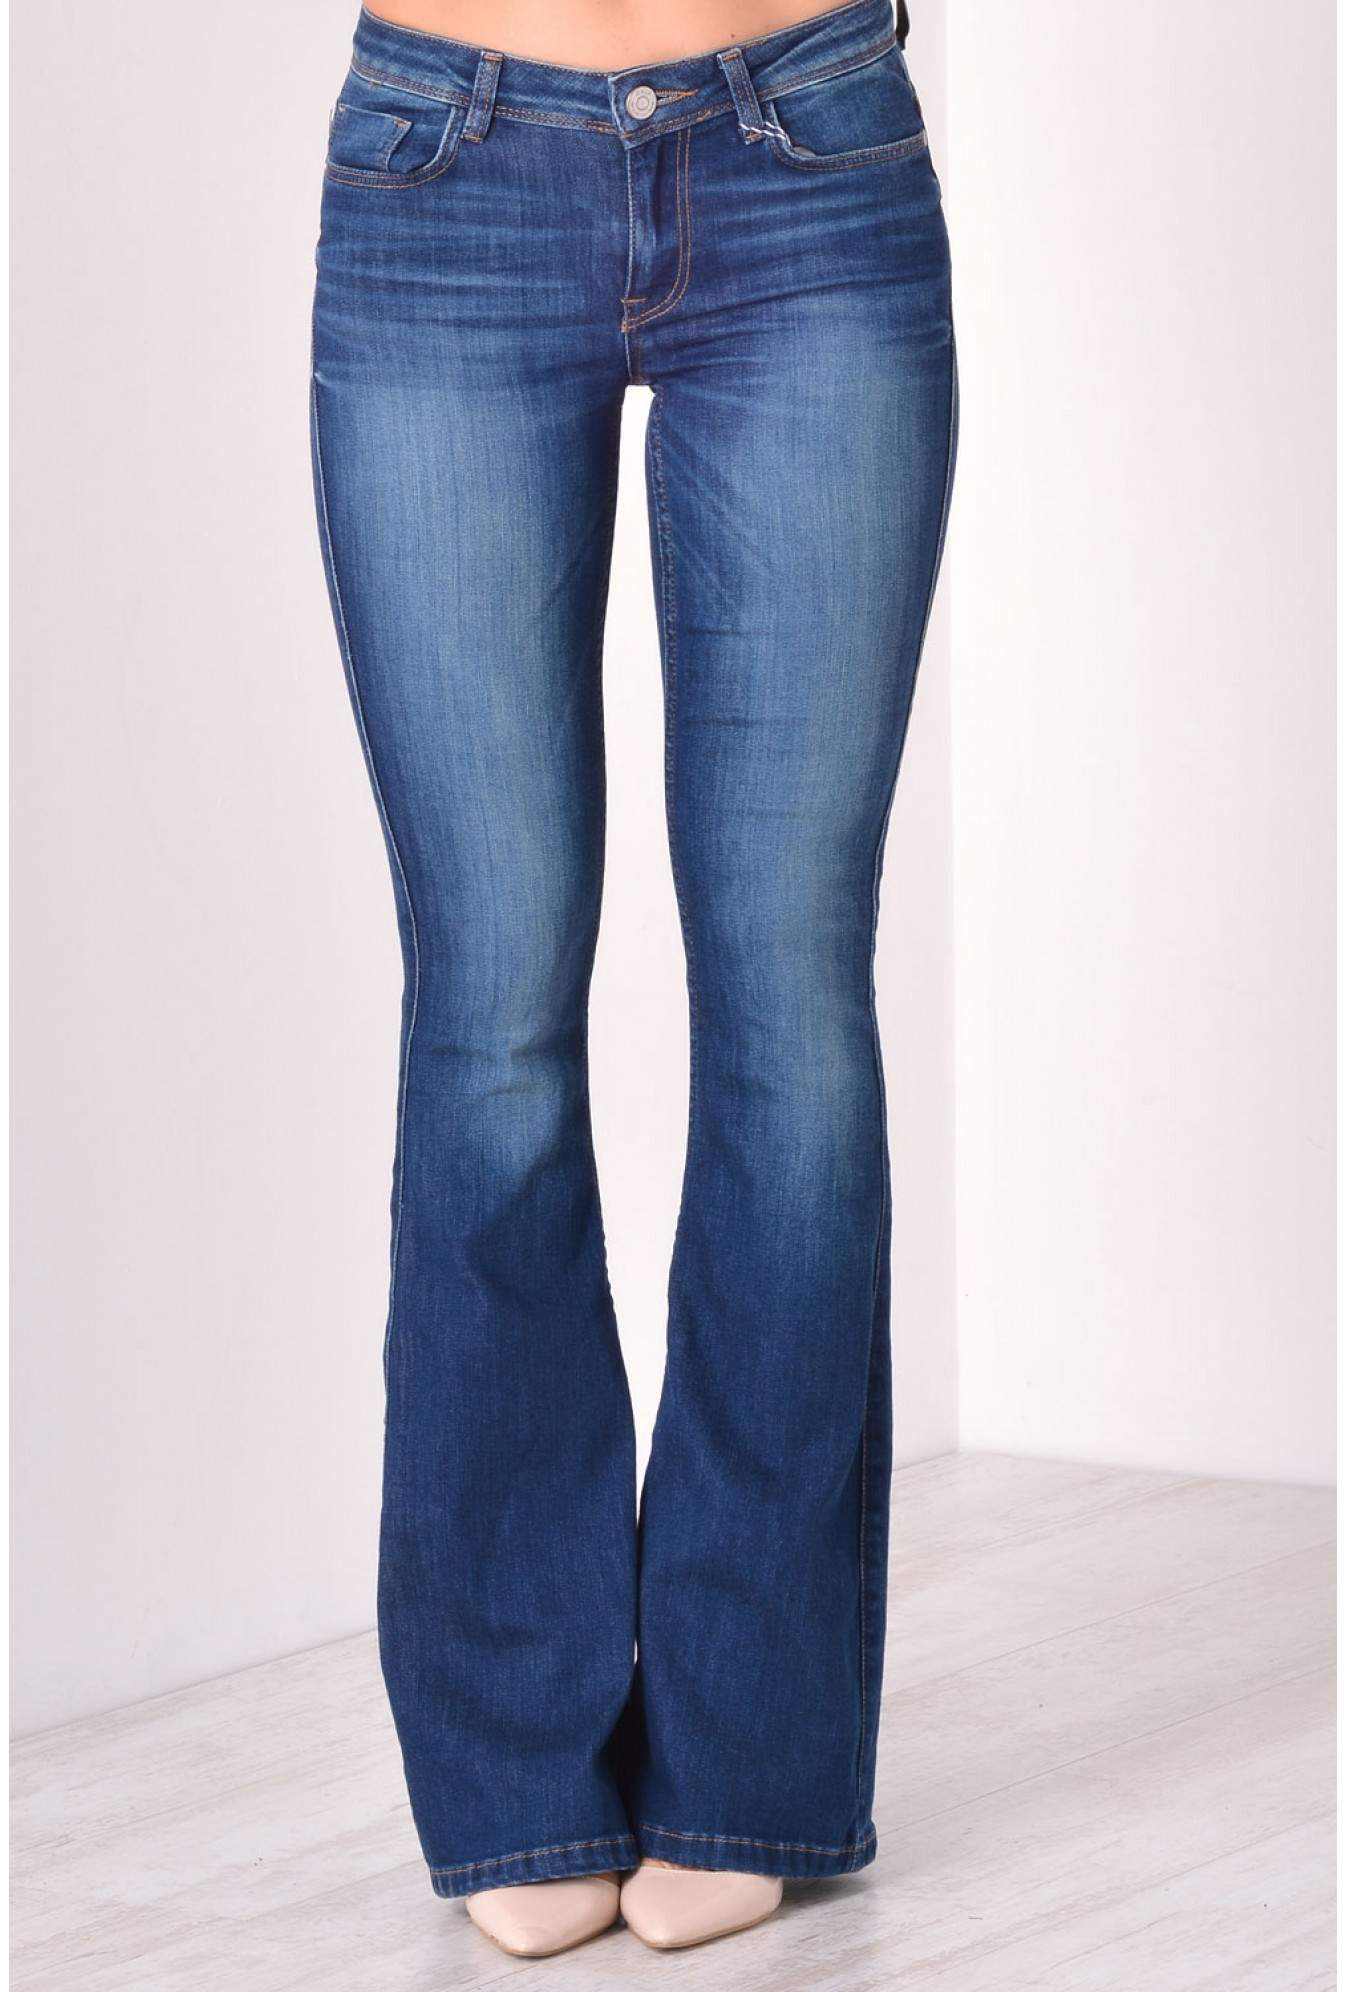 short length flare jeans